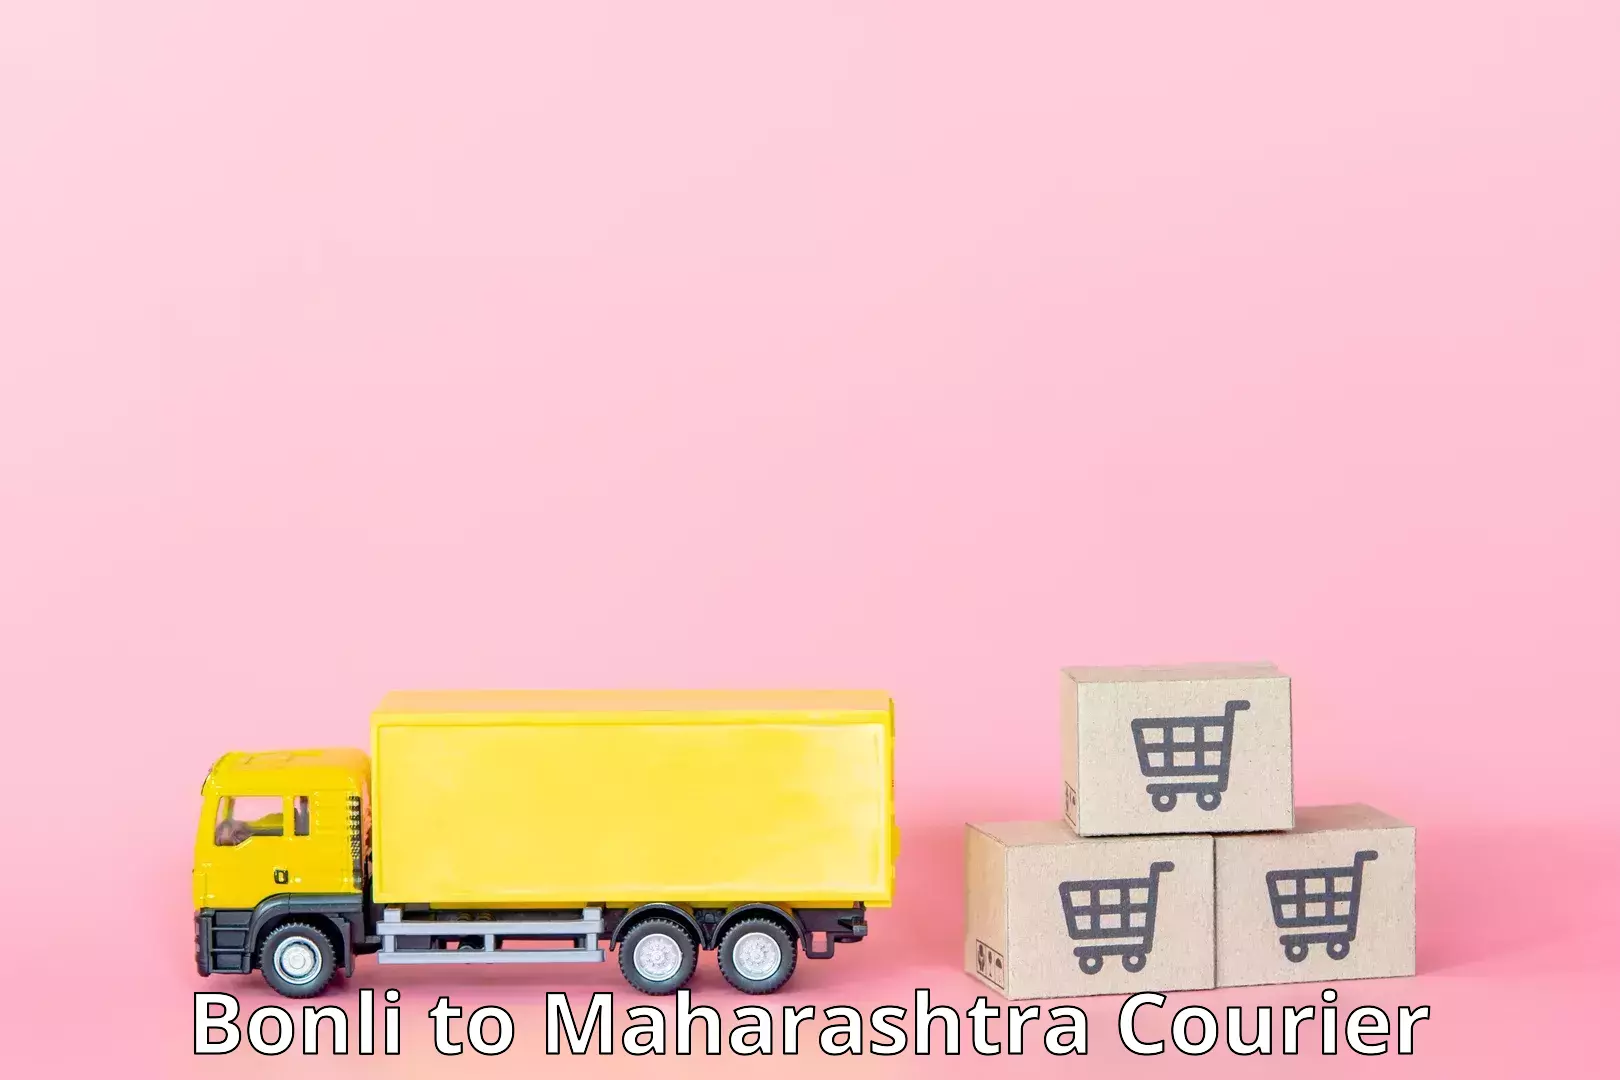 Global logistics network Bonli to Maharashtra